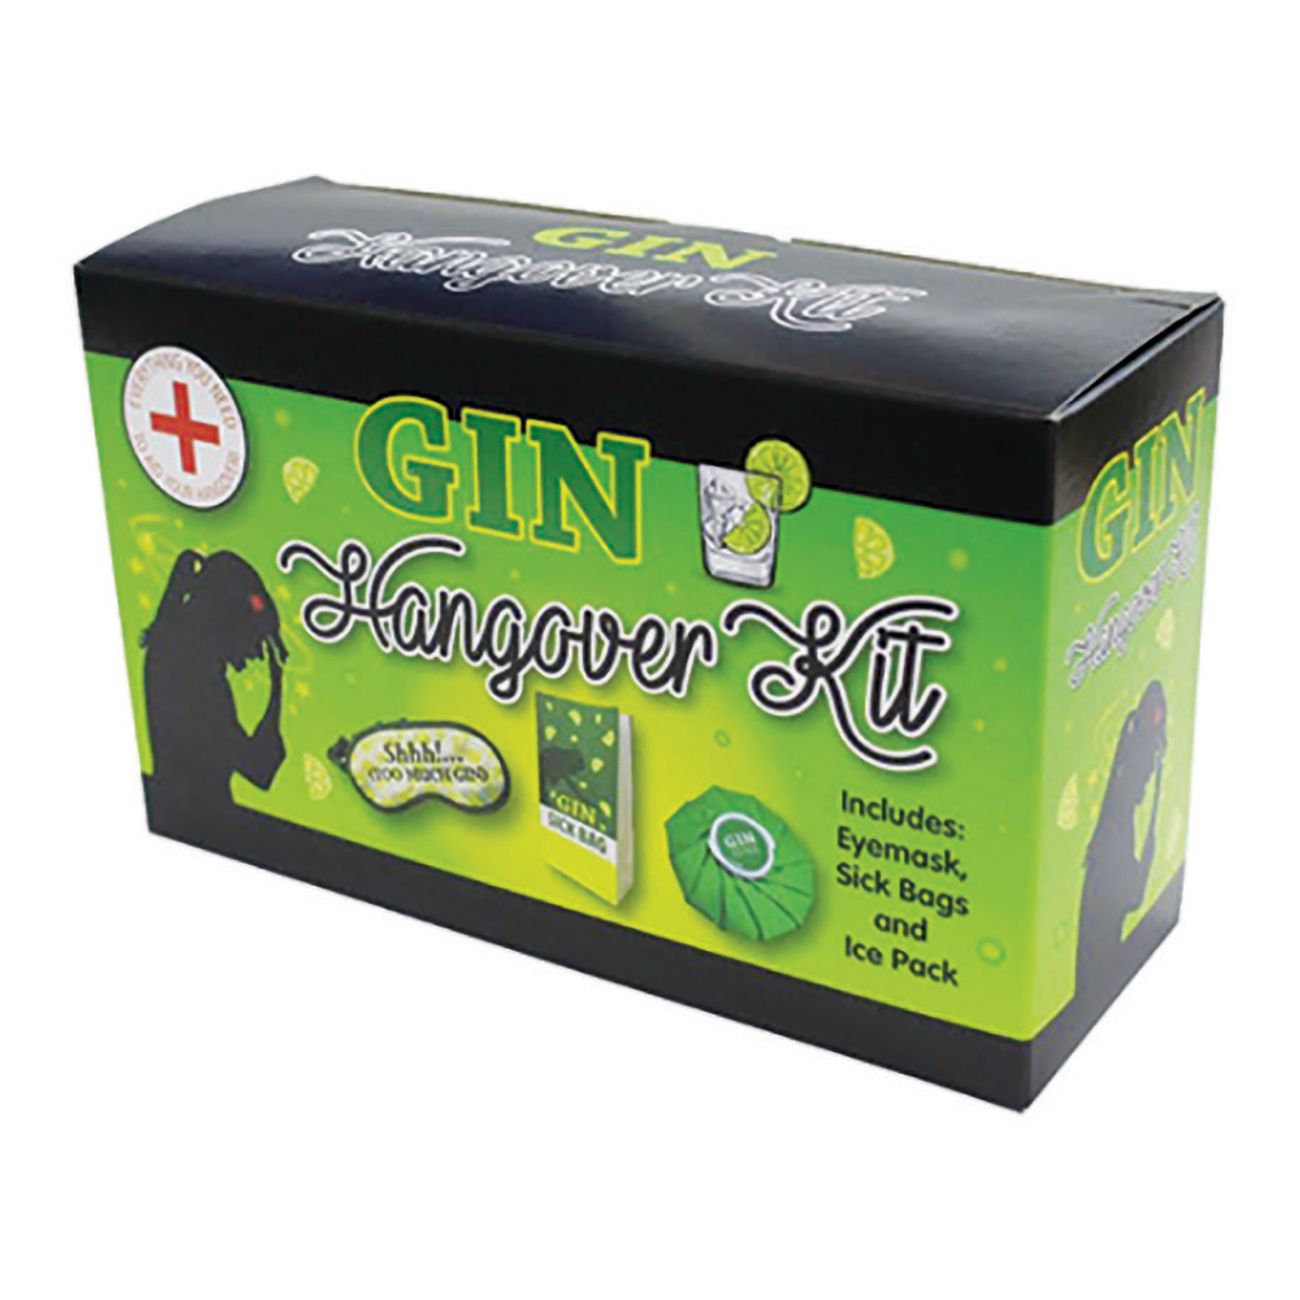 gin-hangover-kit-81120-1